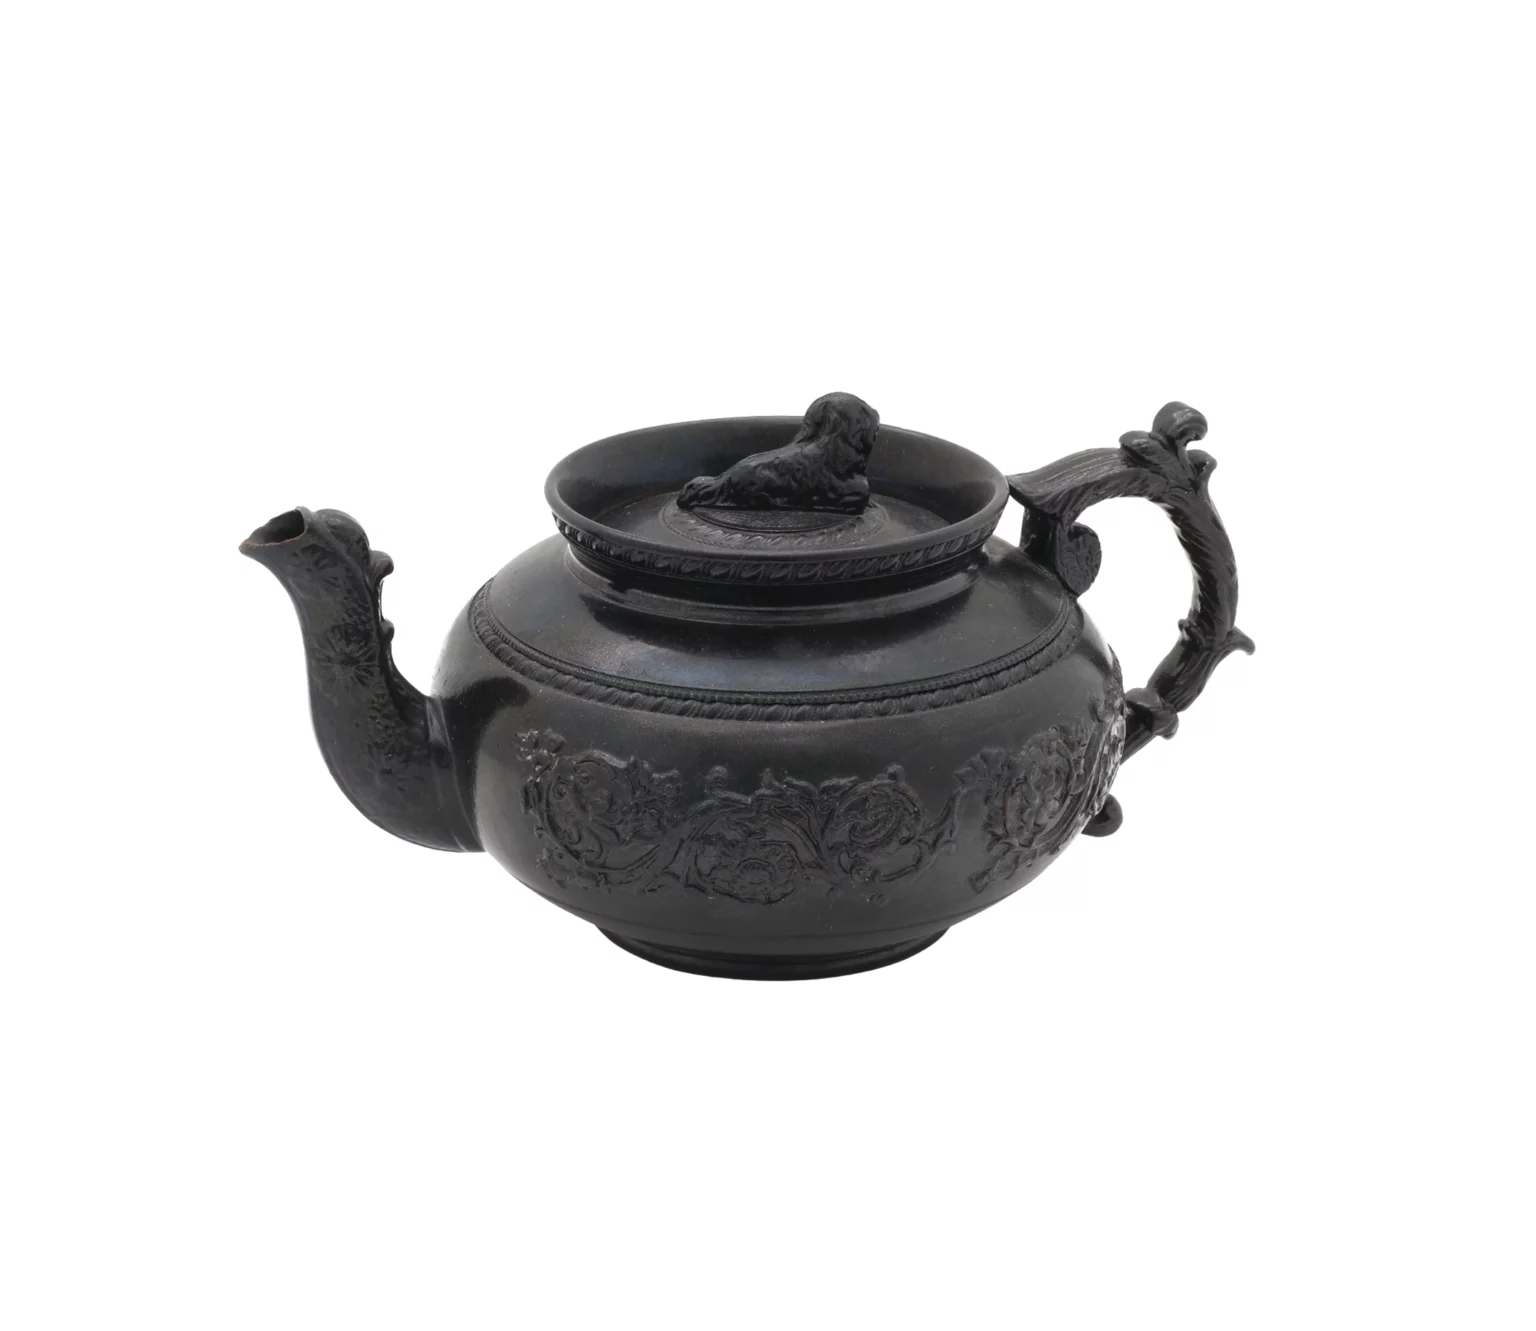 Cyples Black Basalt Staffordshire Teapot